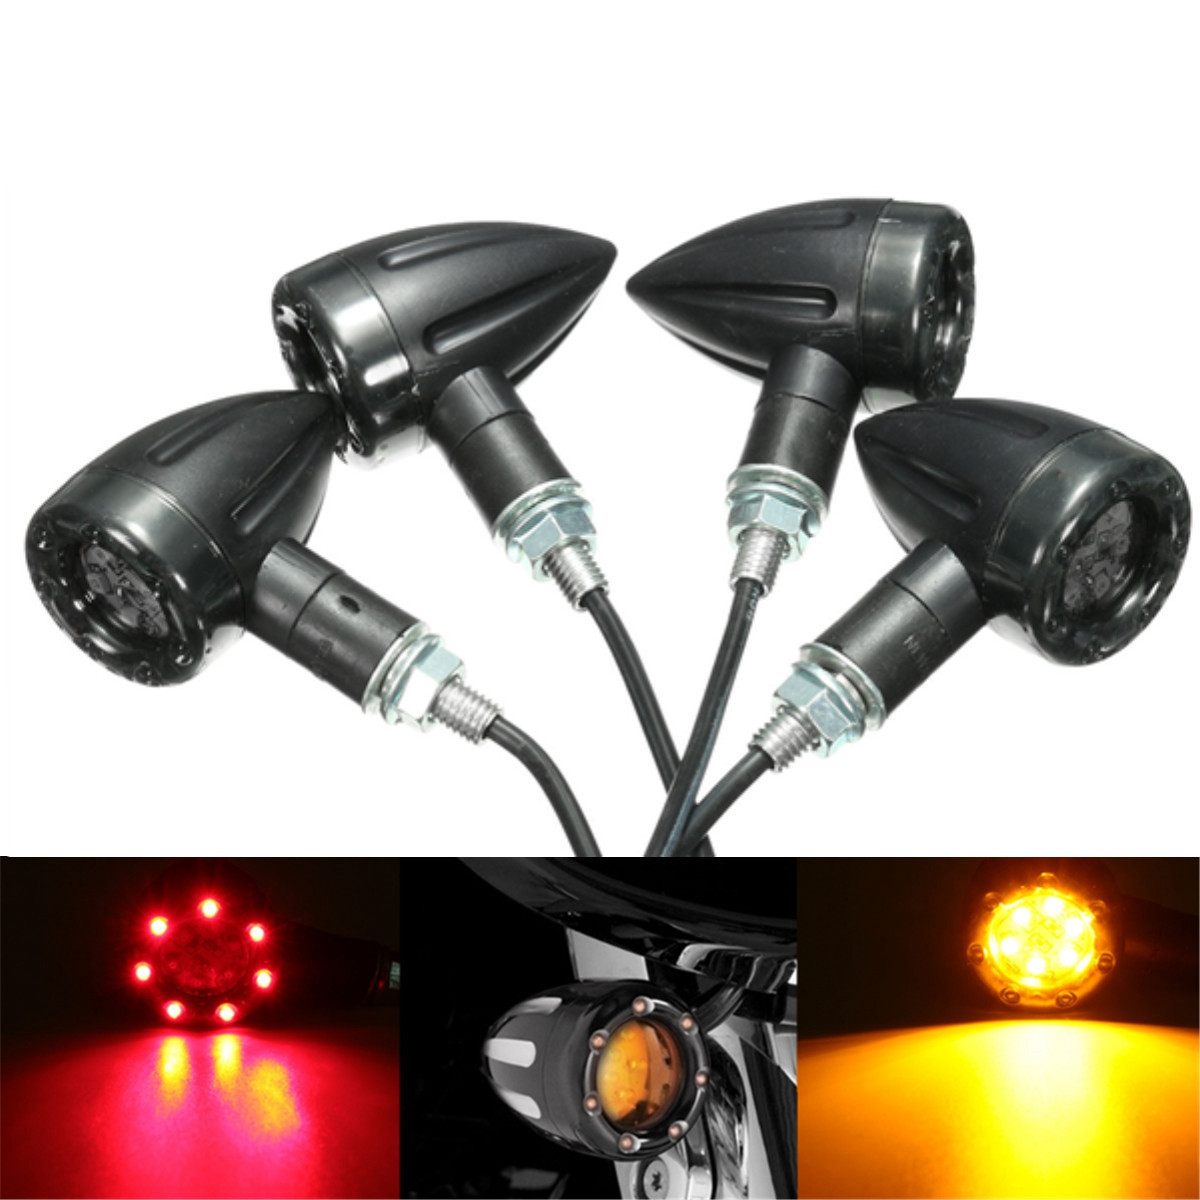 4X Universal LED Amber+Red Light Motorcycle Rear Turn Signal Brake Lights Running Lamp 1